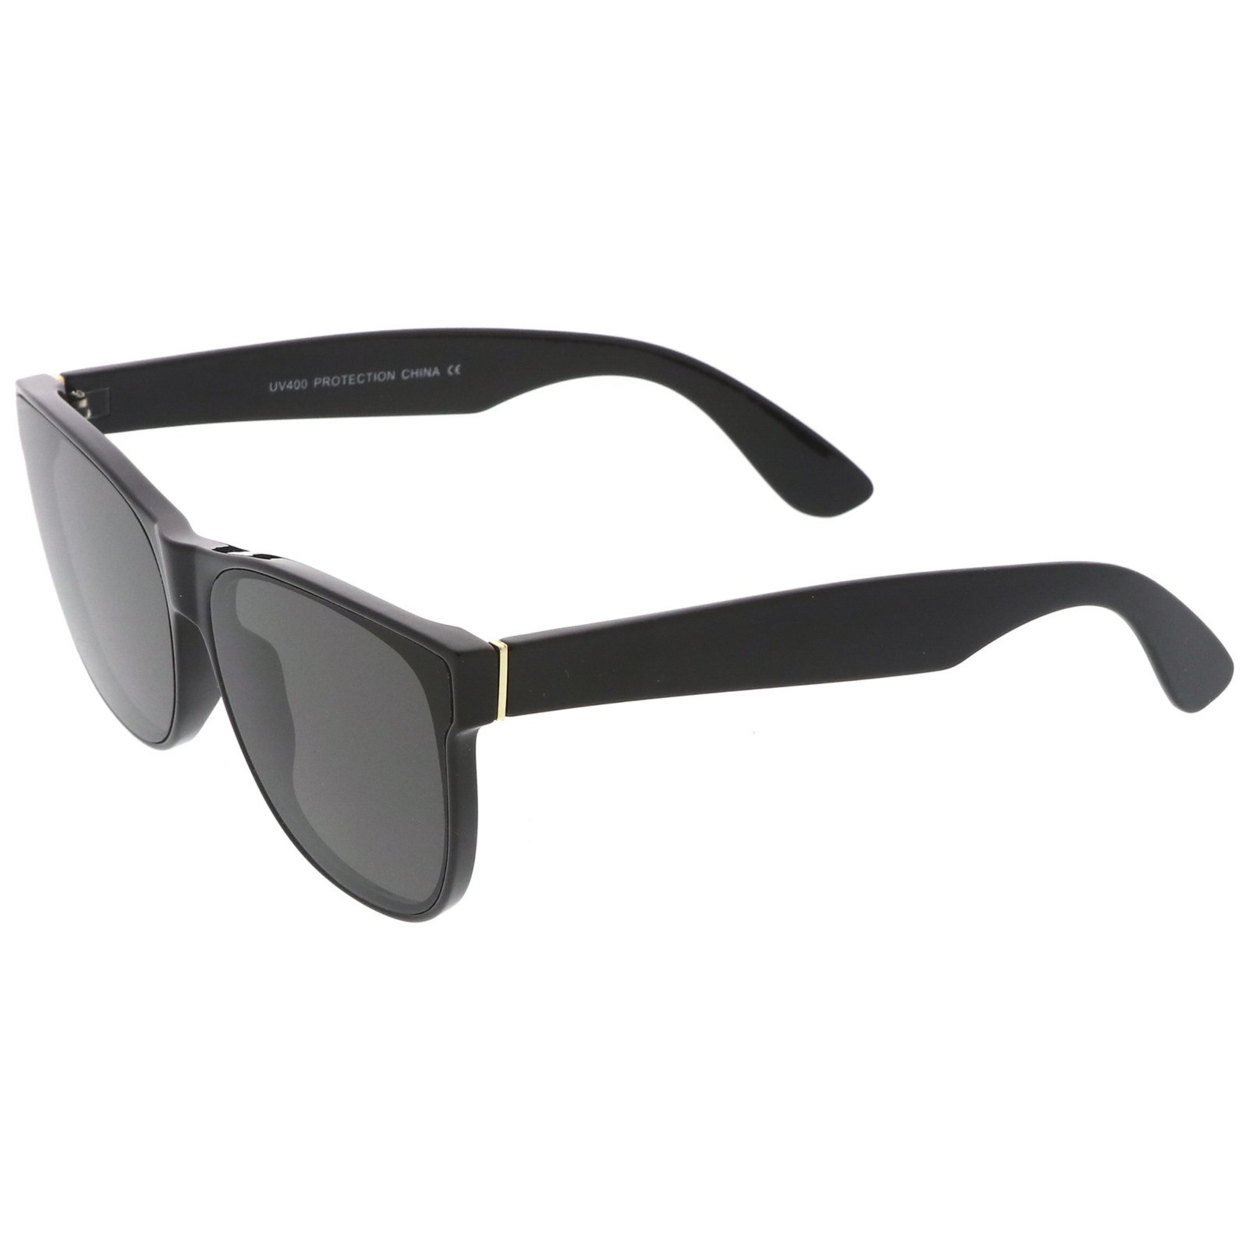 Retro Oversize Wide Temple Square Flat Lens Horn Rimmed Sunglasses 60mm - Shiny Black / Smoke